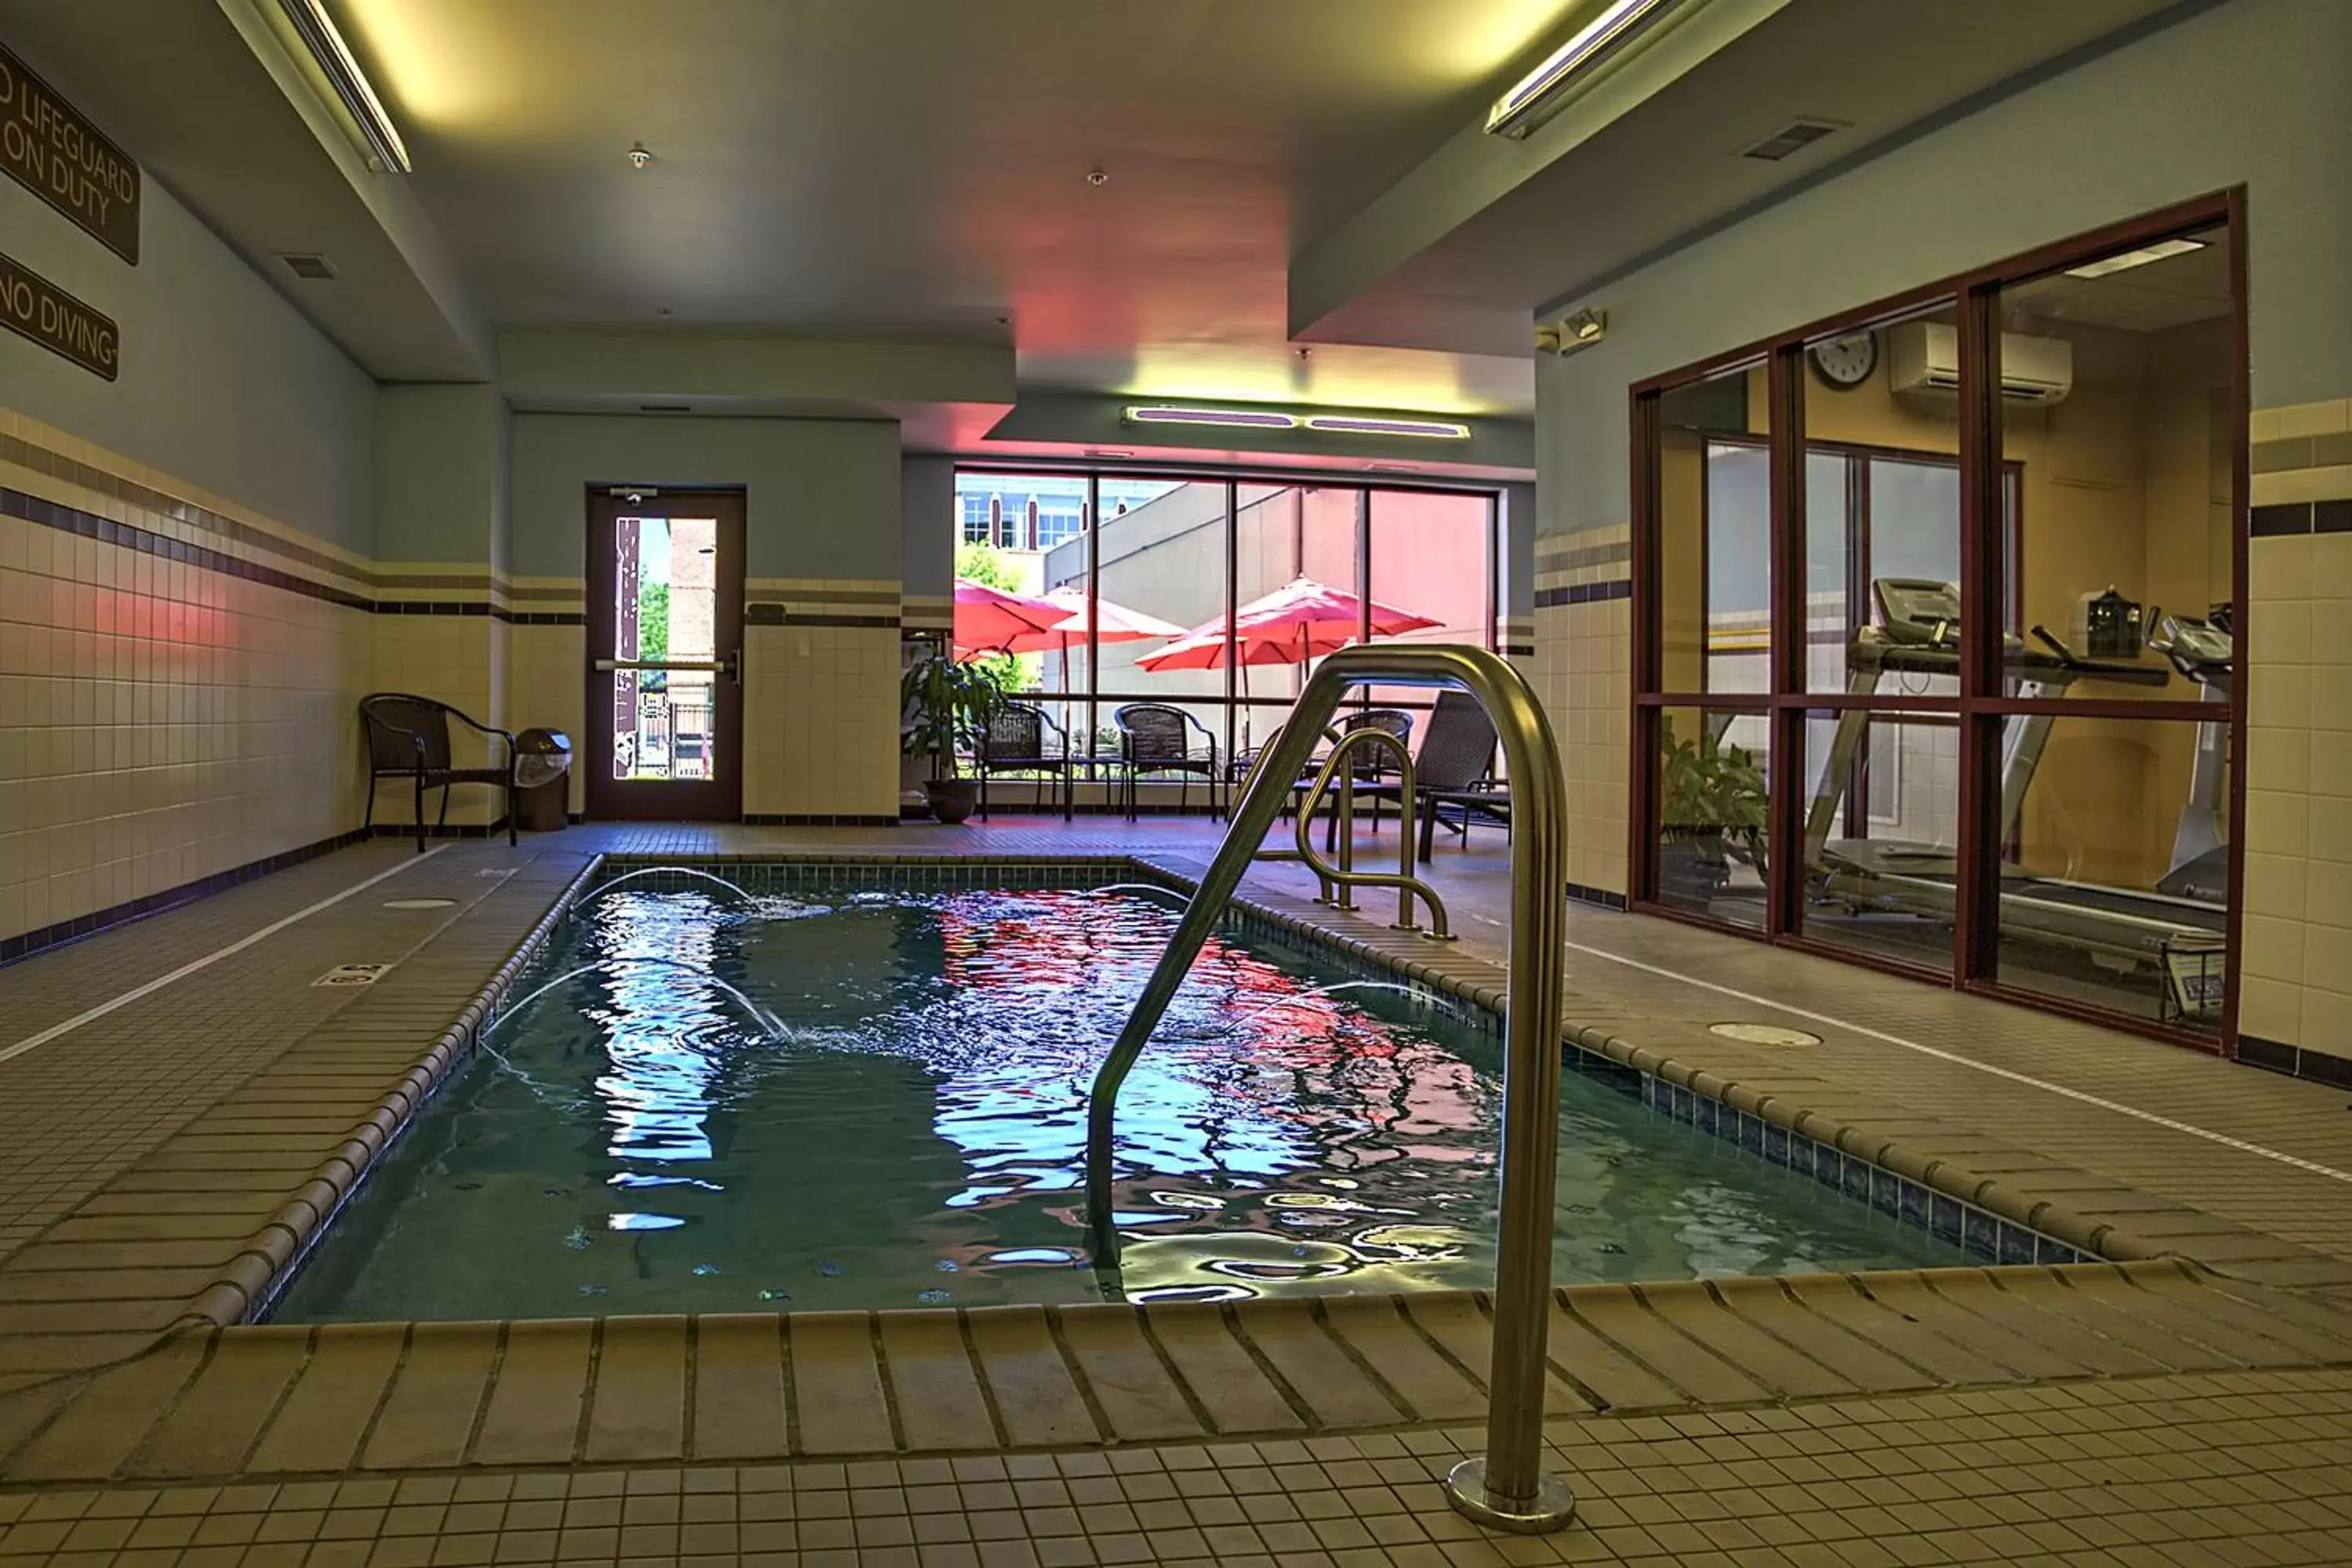 Swimming Pool in The Hotel Warner